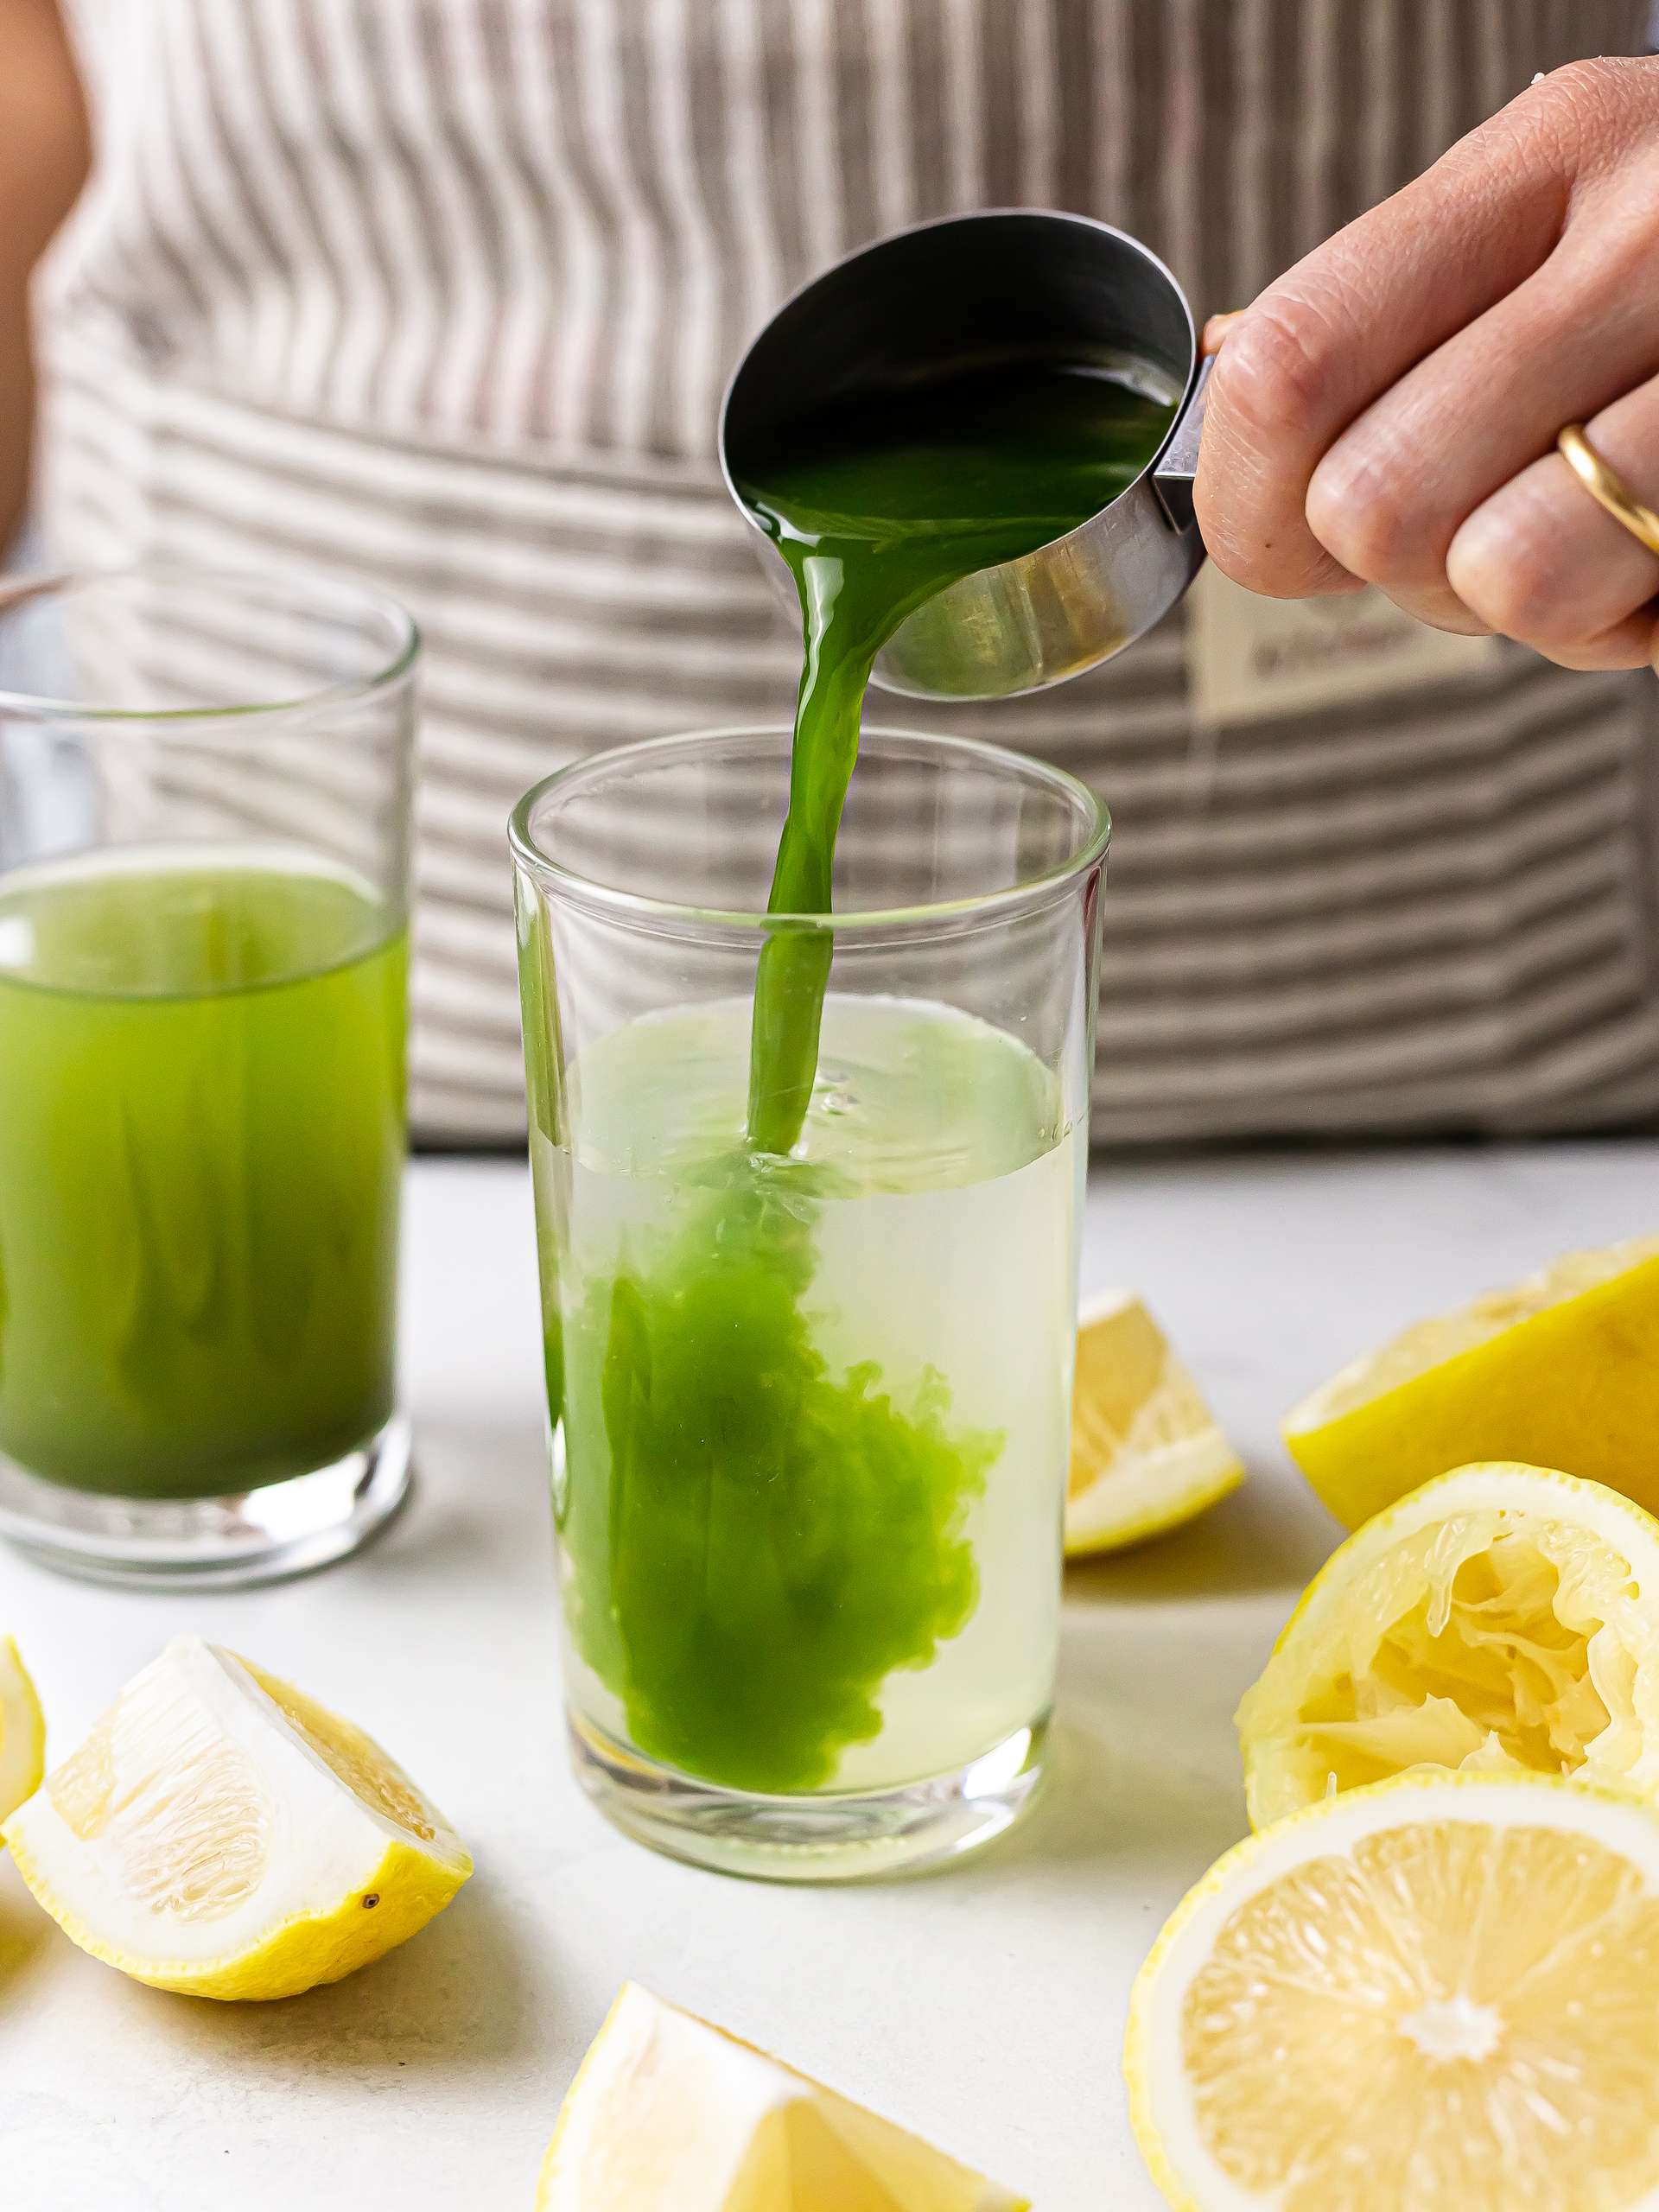 matcha green tea poured into lemonade in a glass